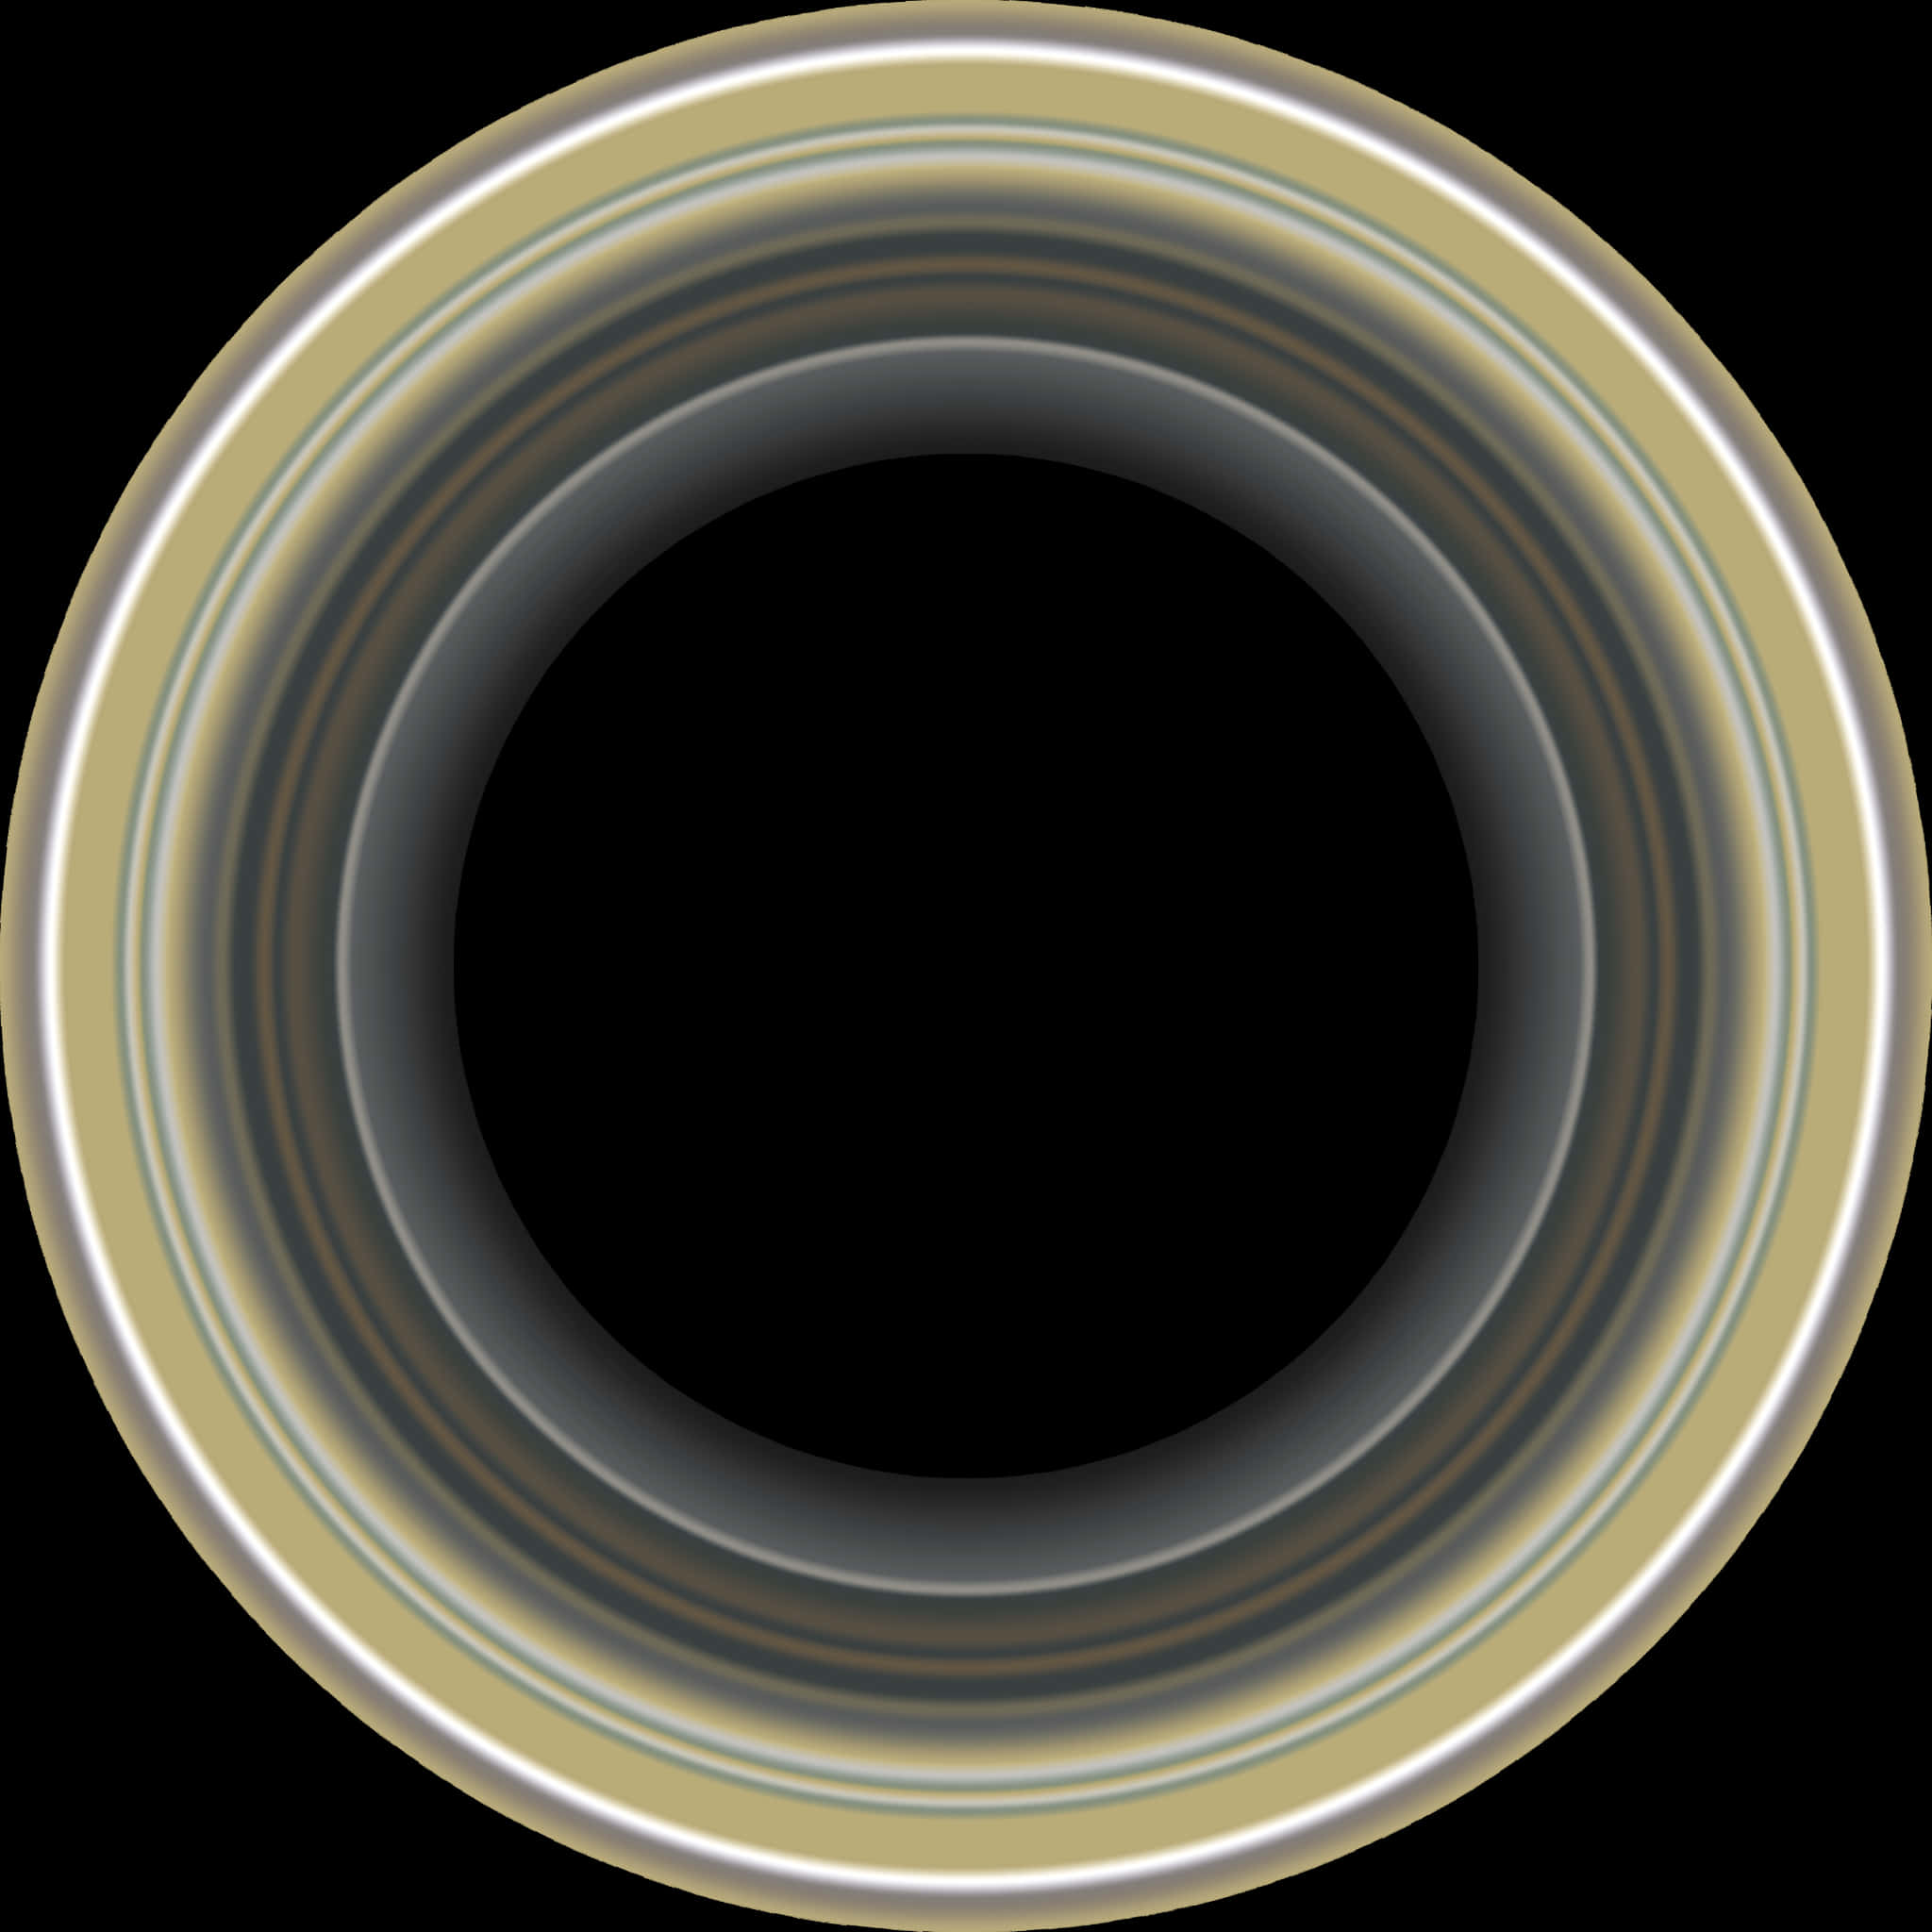 Saturn Rings Close Up View PNG image